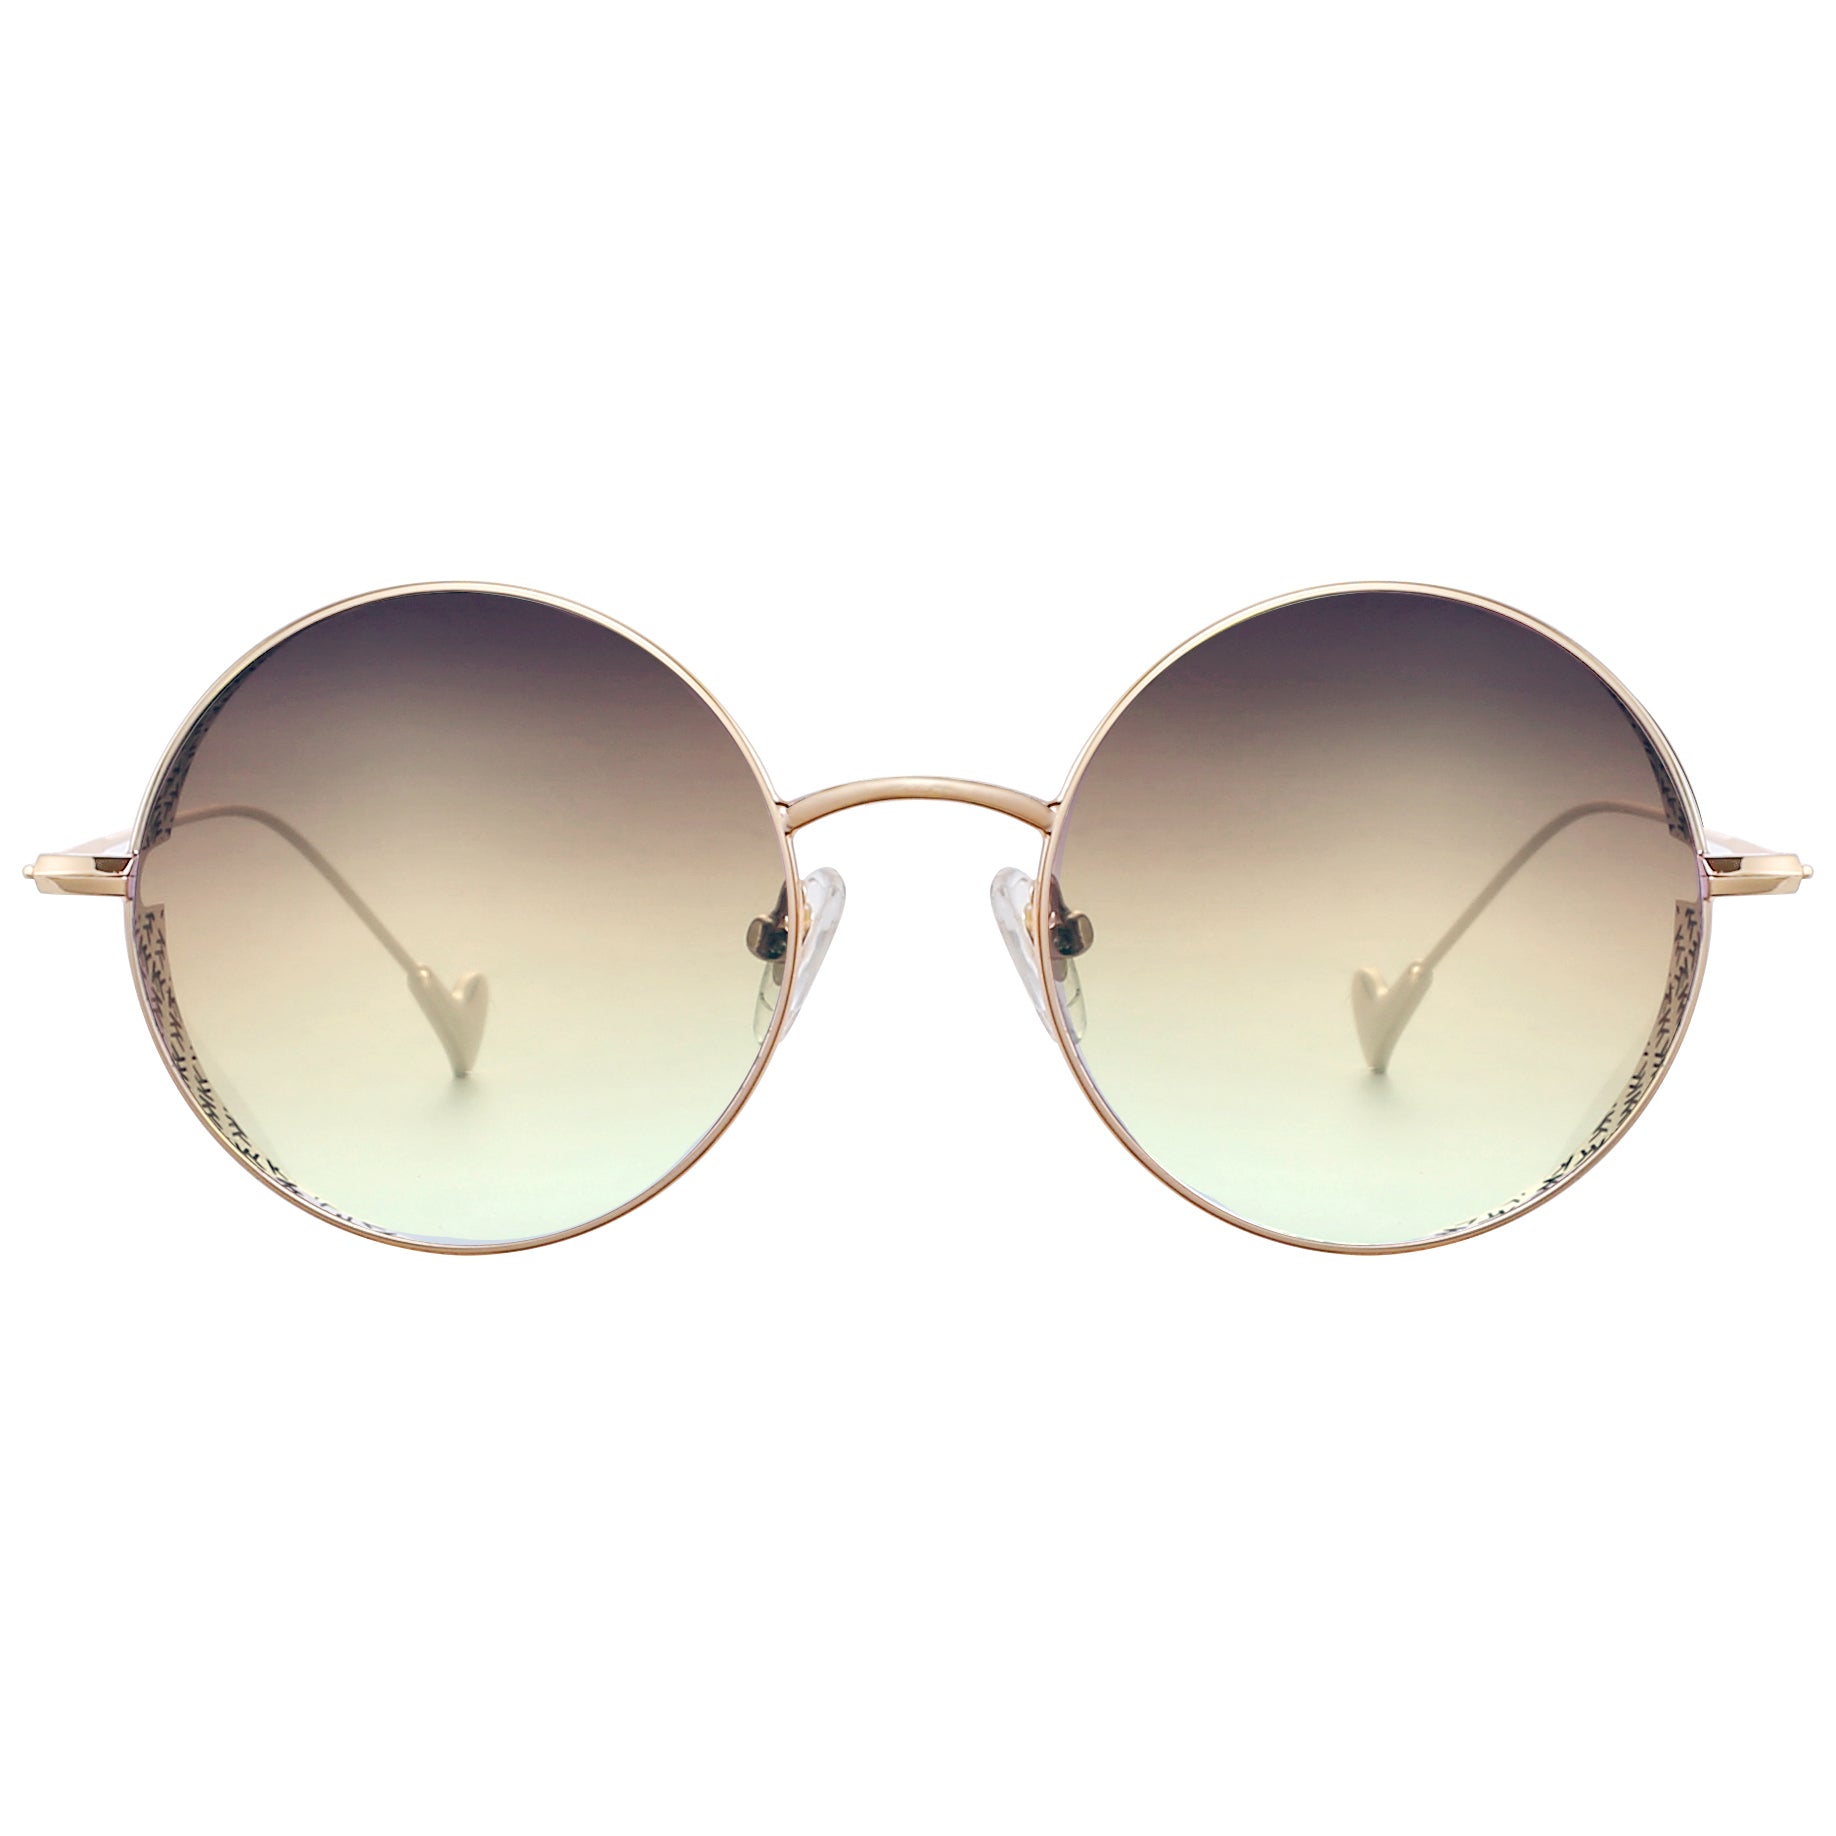 Mokki Round 18k Gold-plated sunglasses